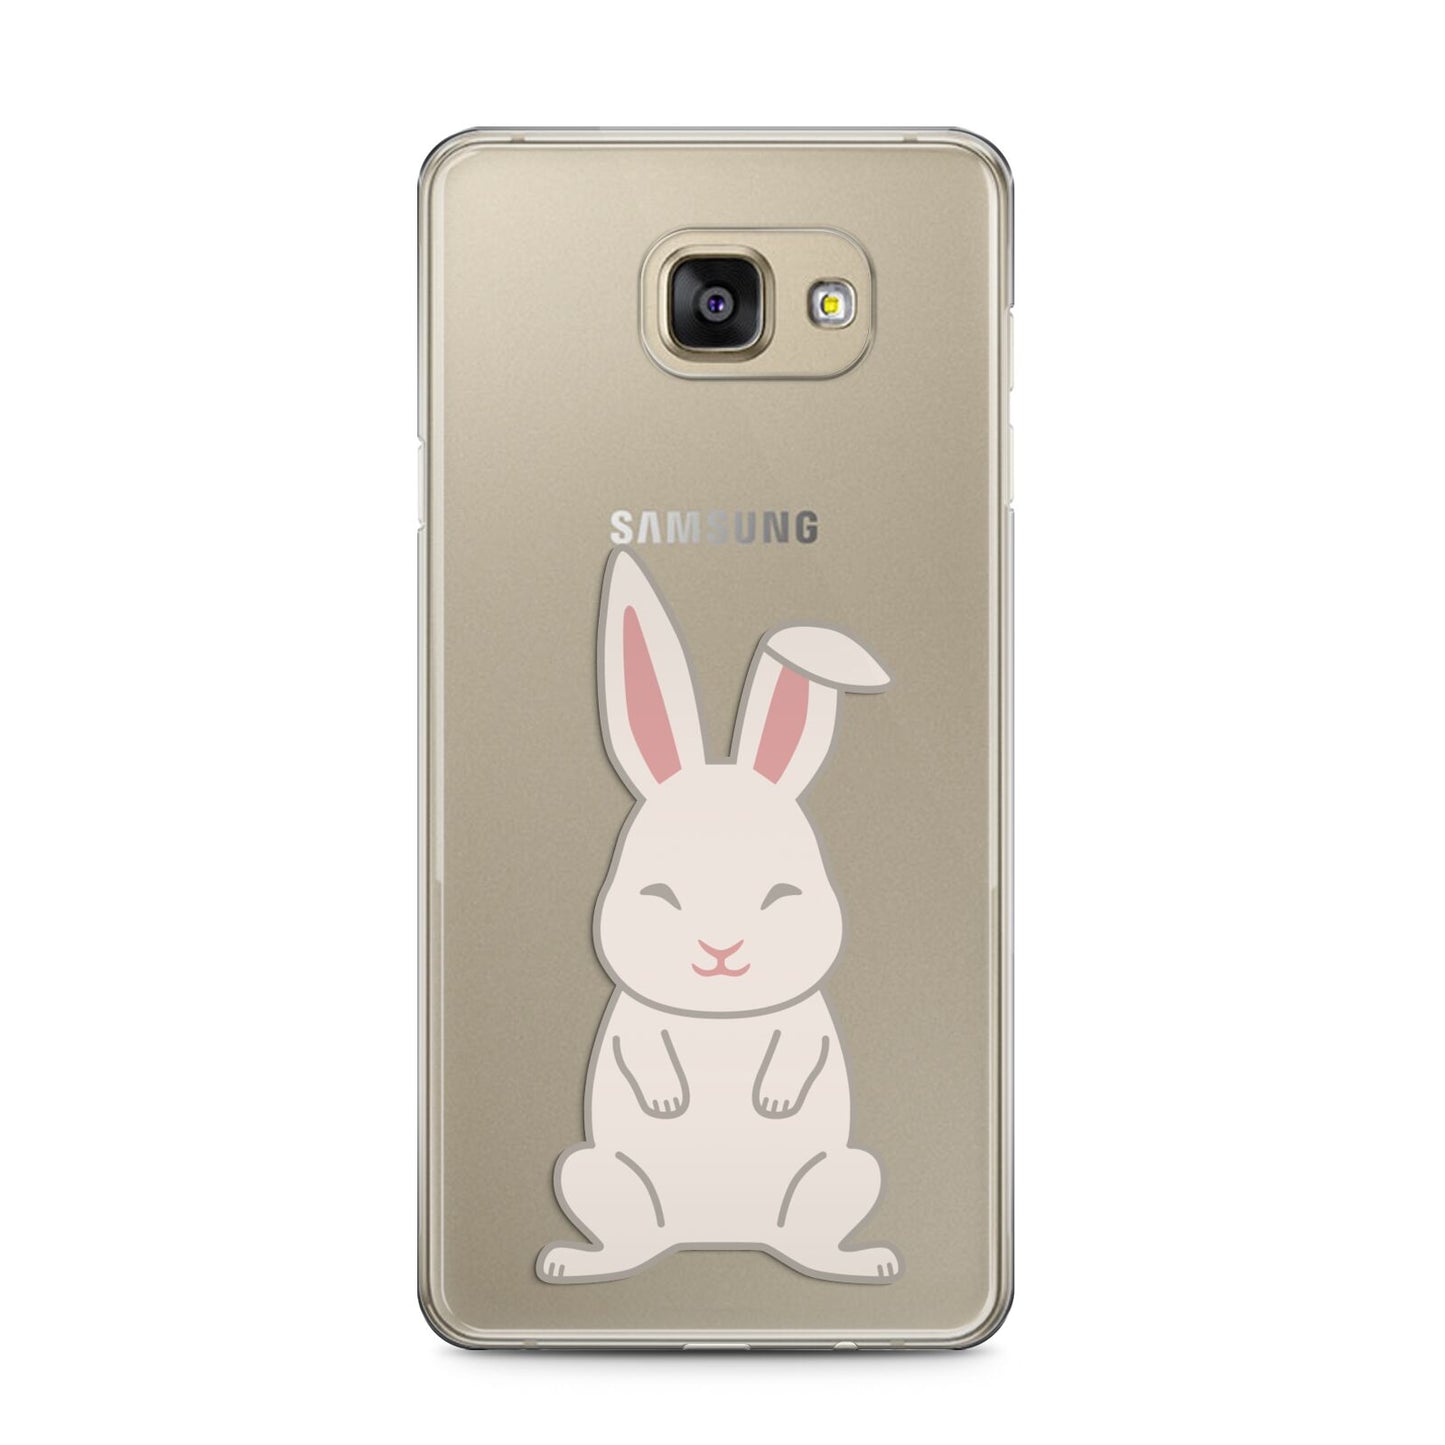 Bunny Samsung Galaxy A5 2016 Case on gold phone